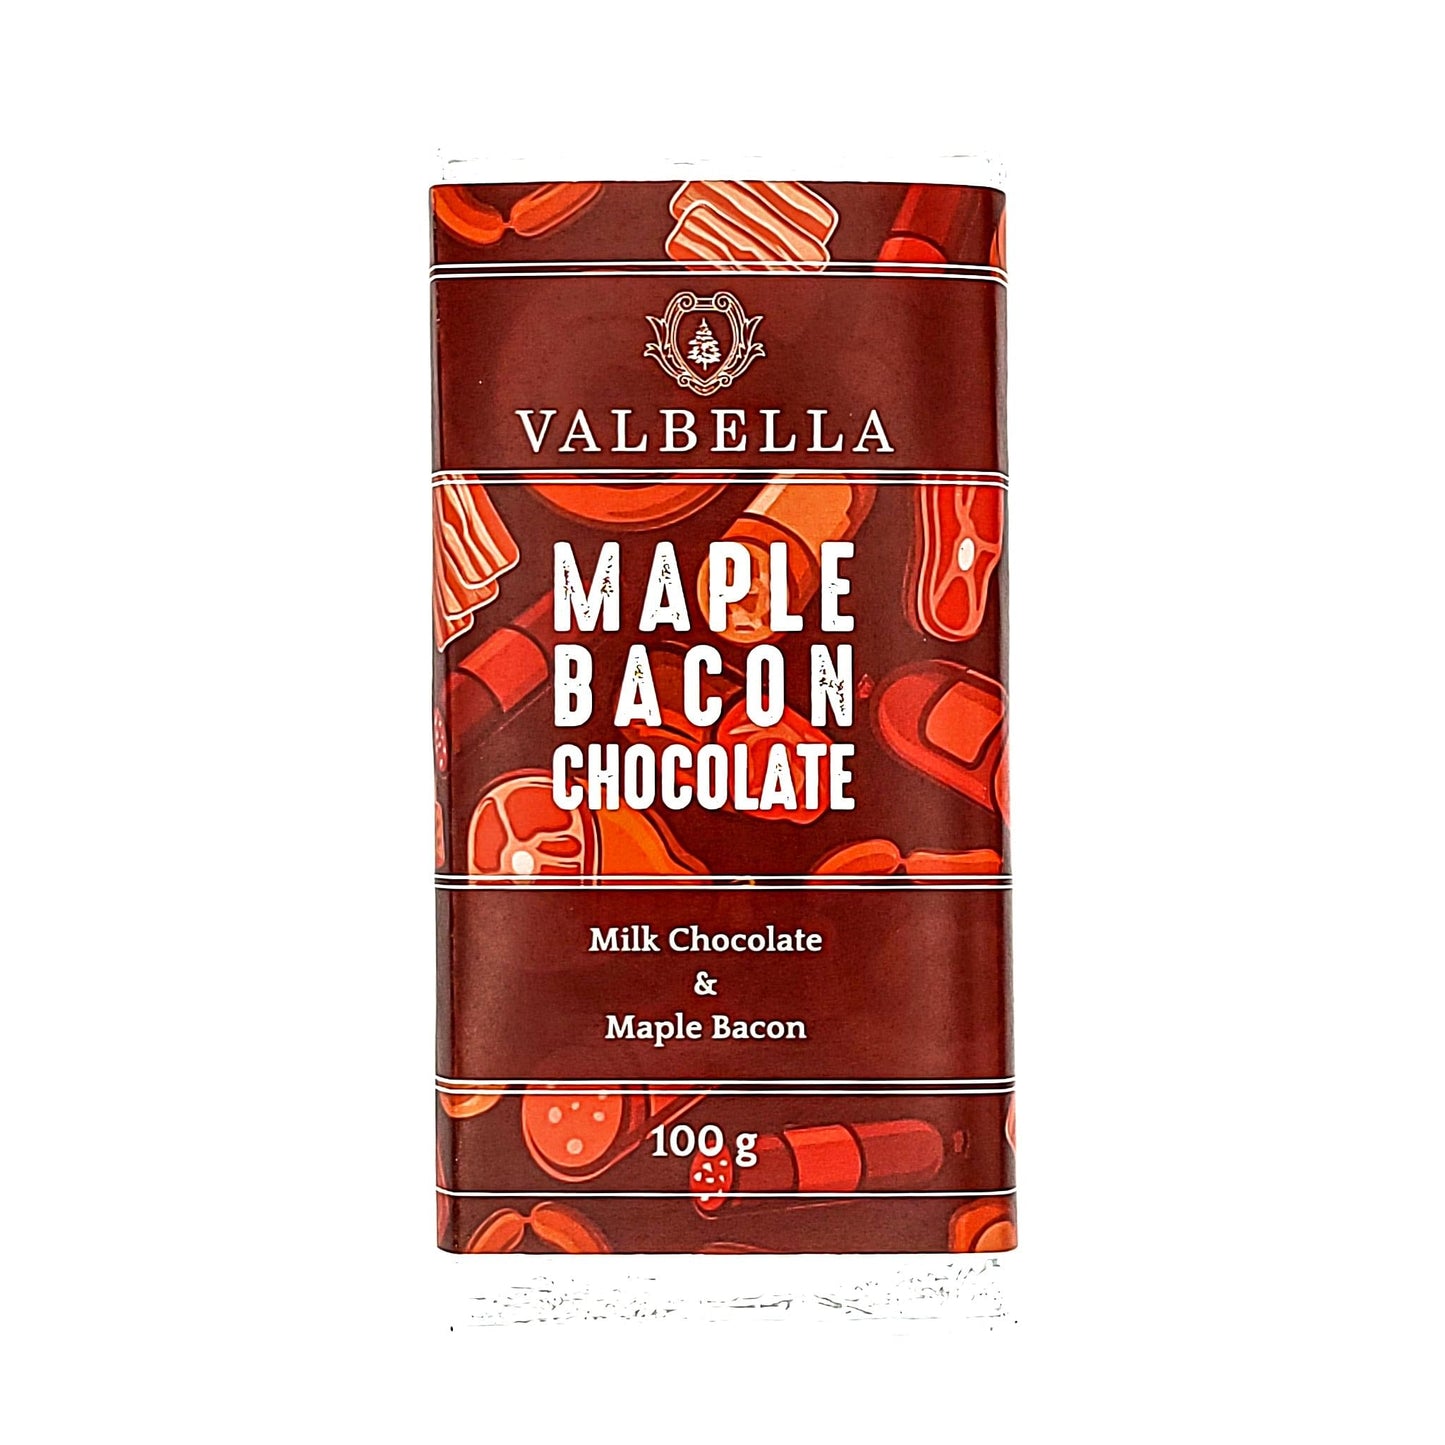 Valbella Chocolate - Maple Bacon Chocolate - 100g